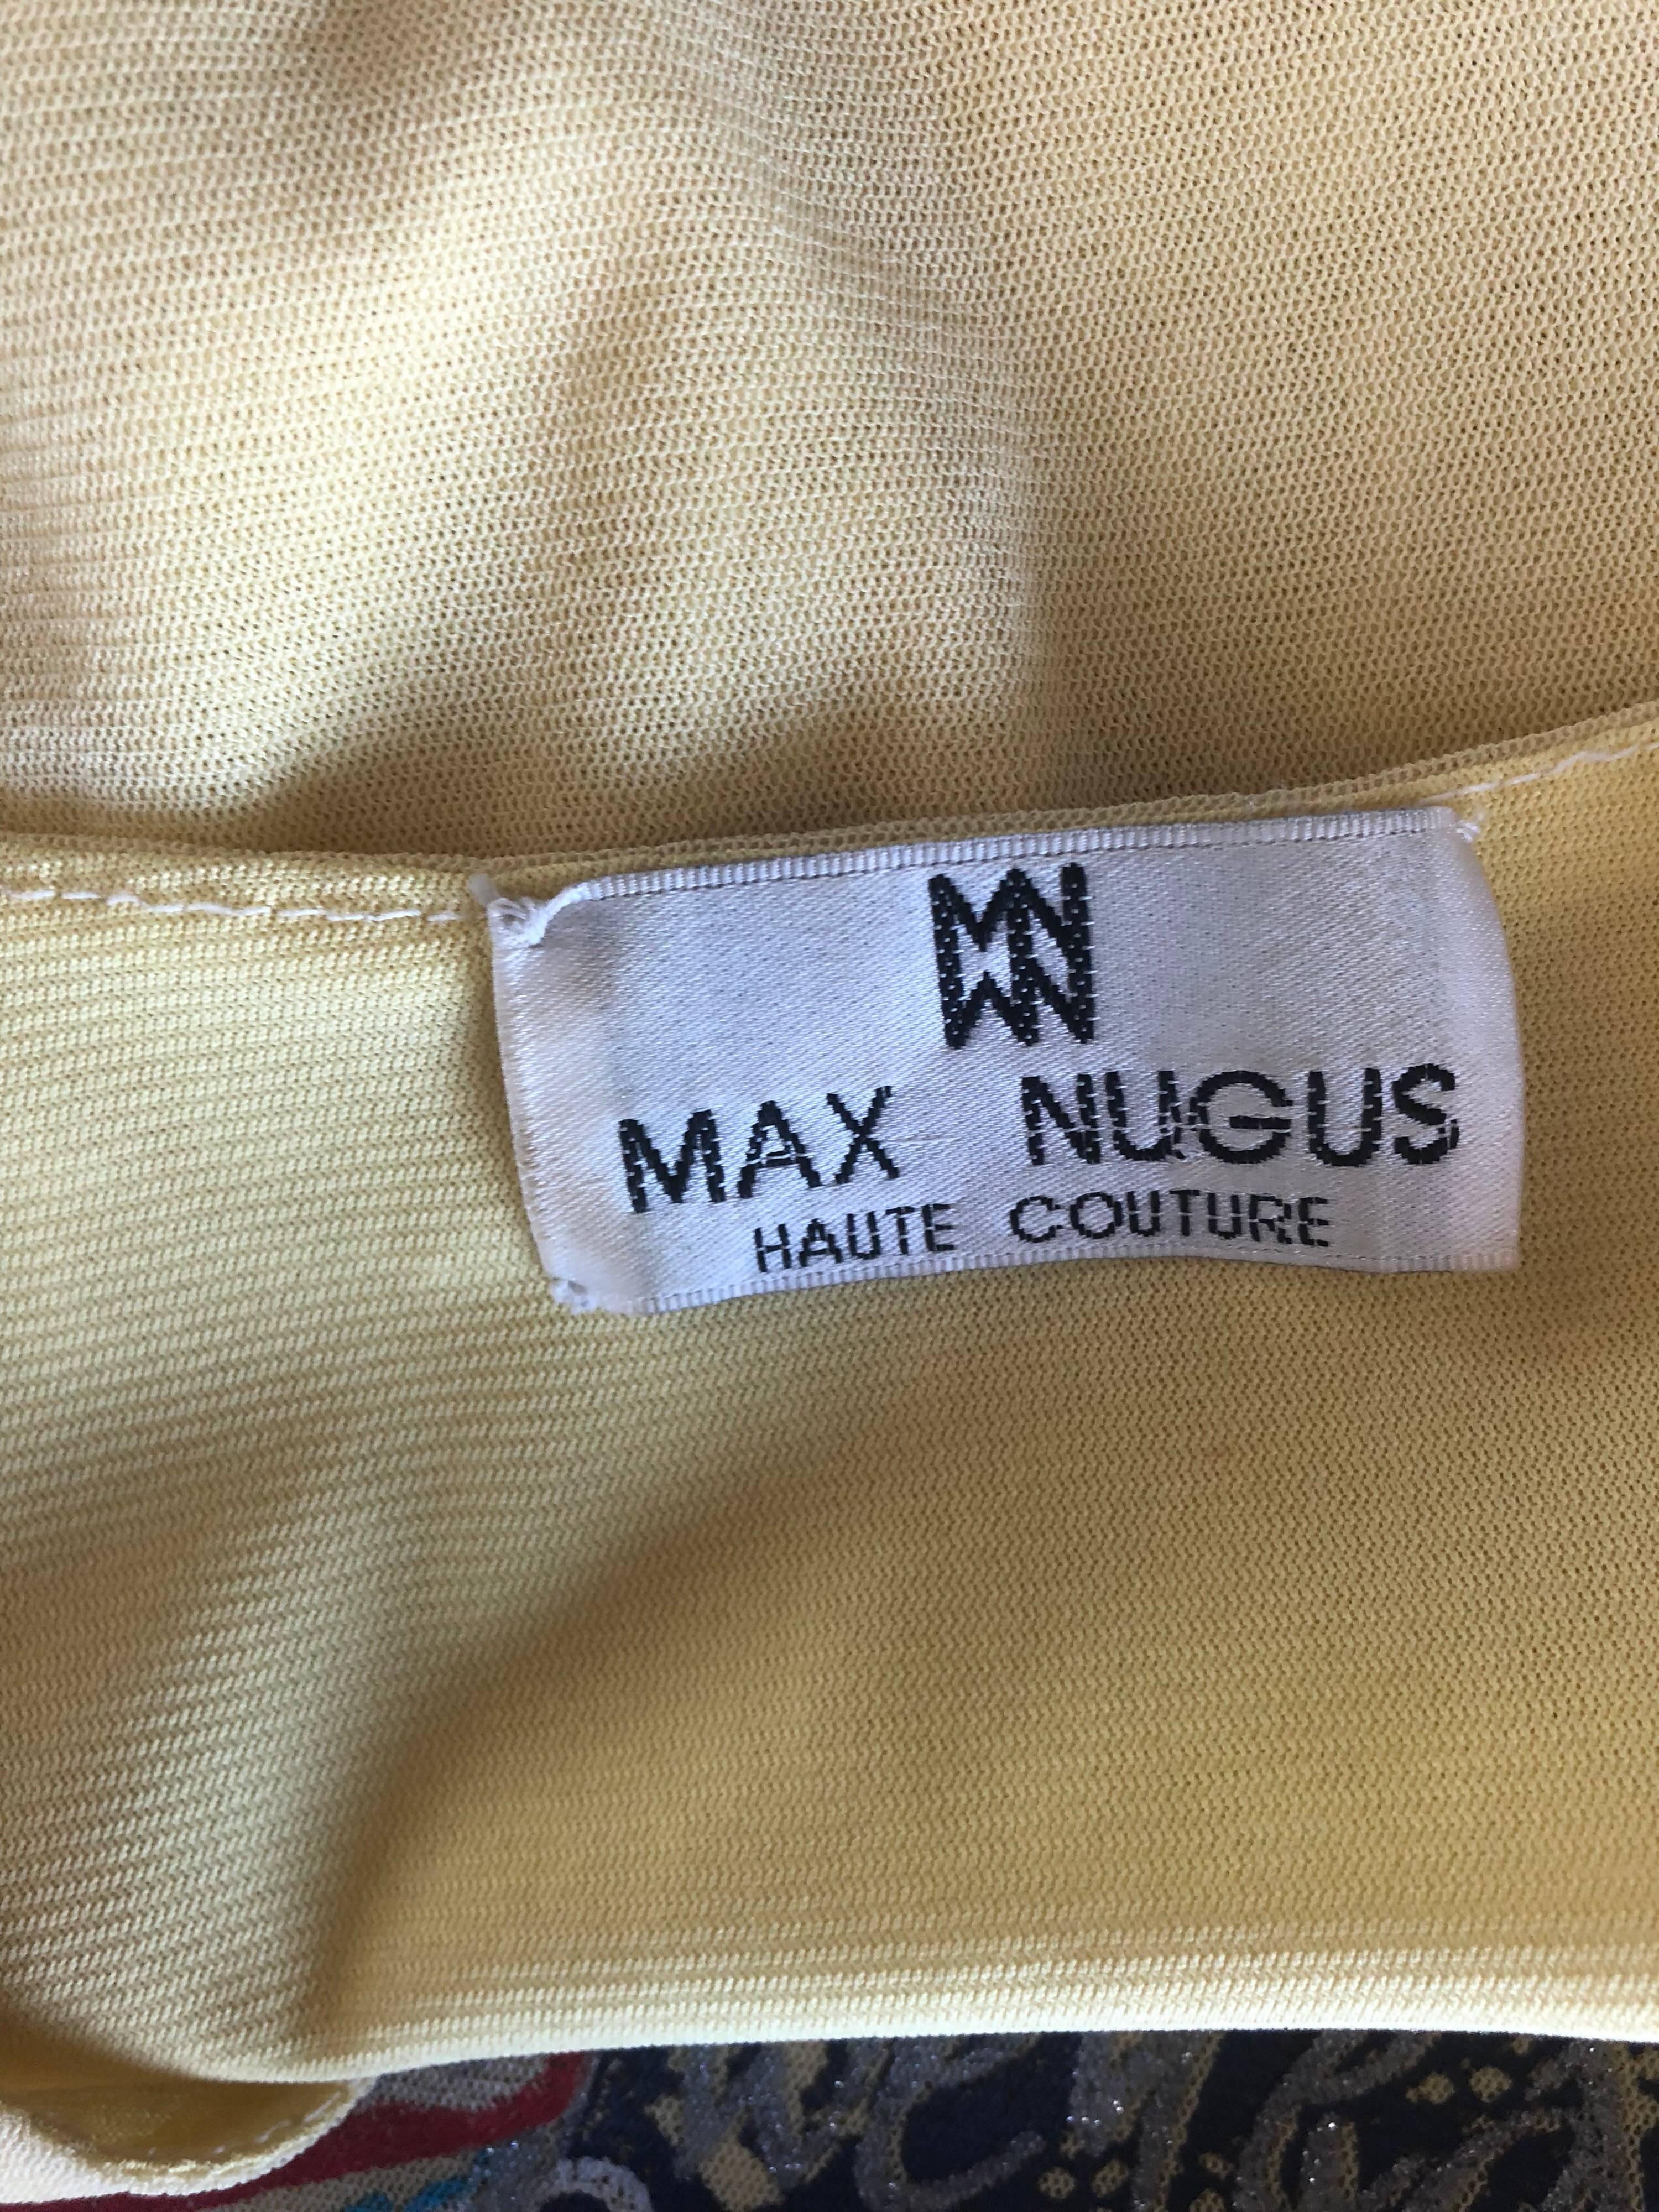 1990s Max Nugus Haute Couture Yellow Graffiti Print Mesh Vintage V Neck Shirt For Sale 7